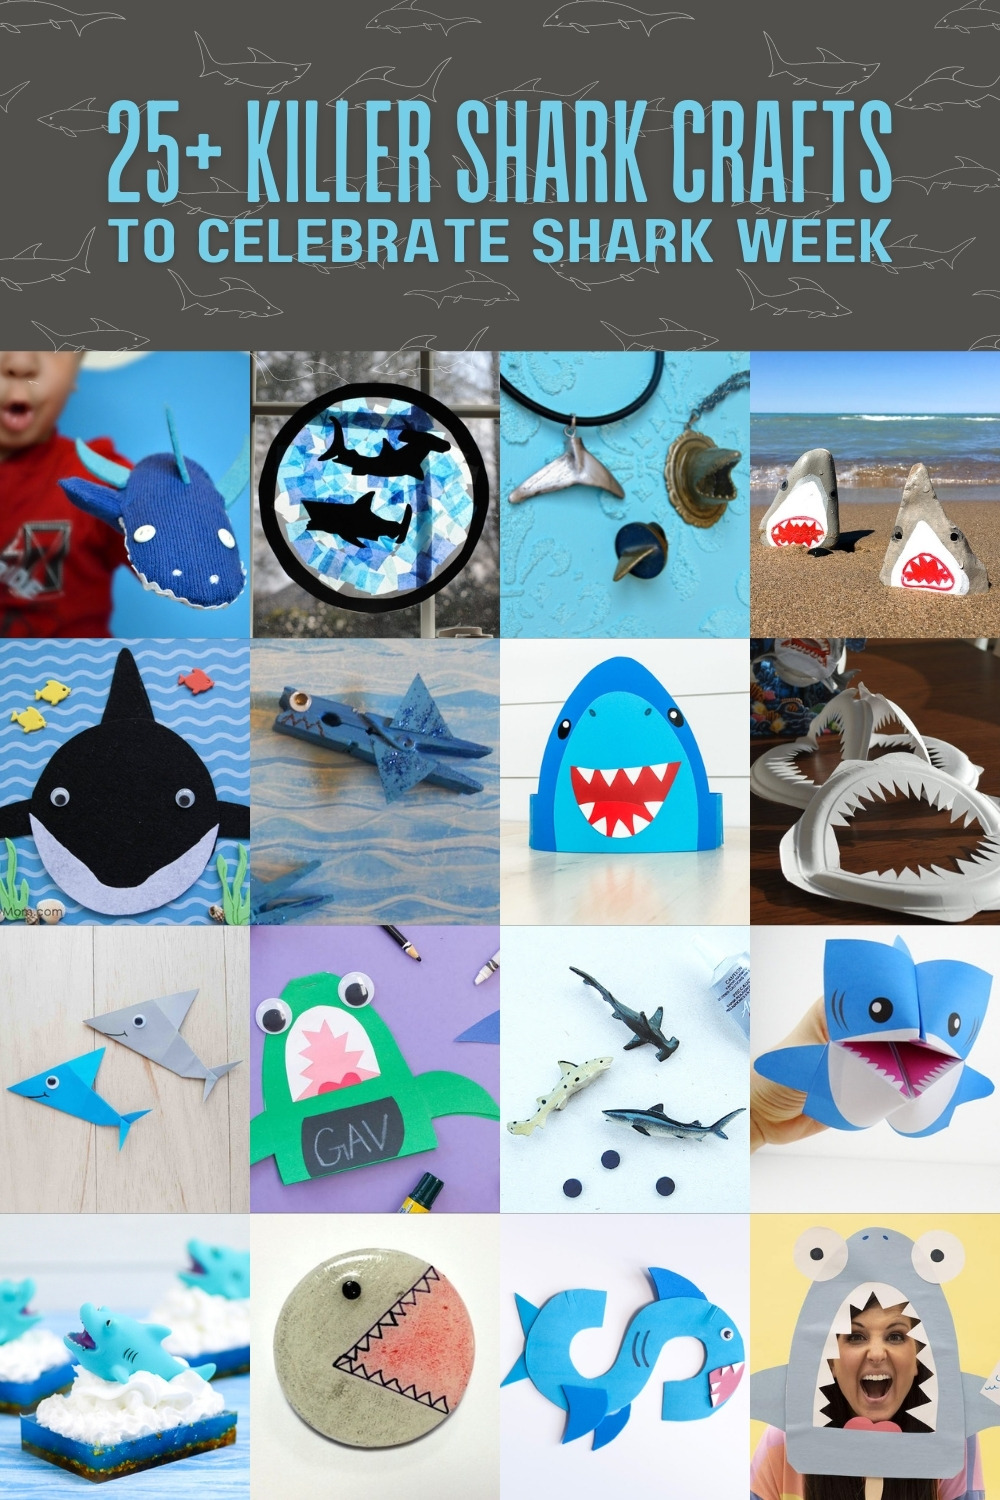 Killer Shark Crafts to Celebrate Shark Week